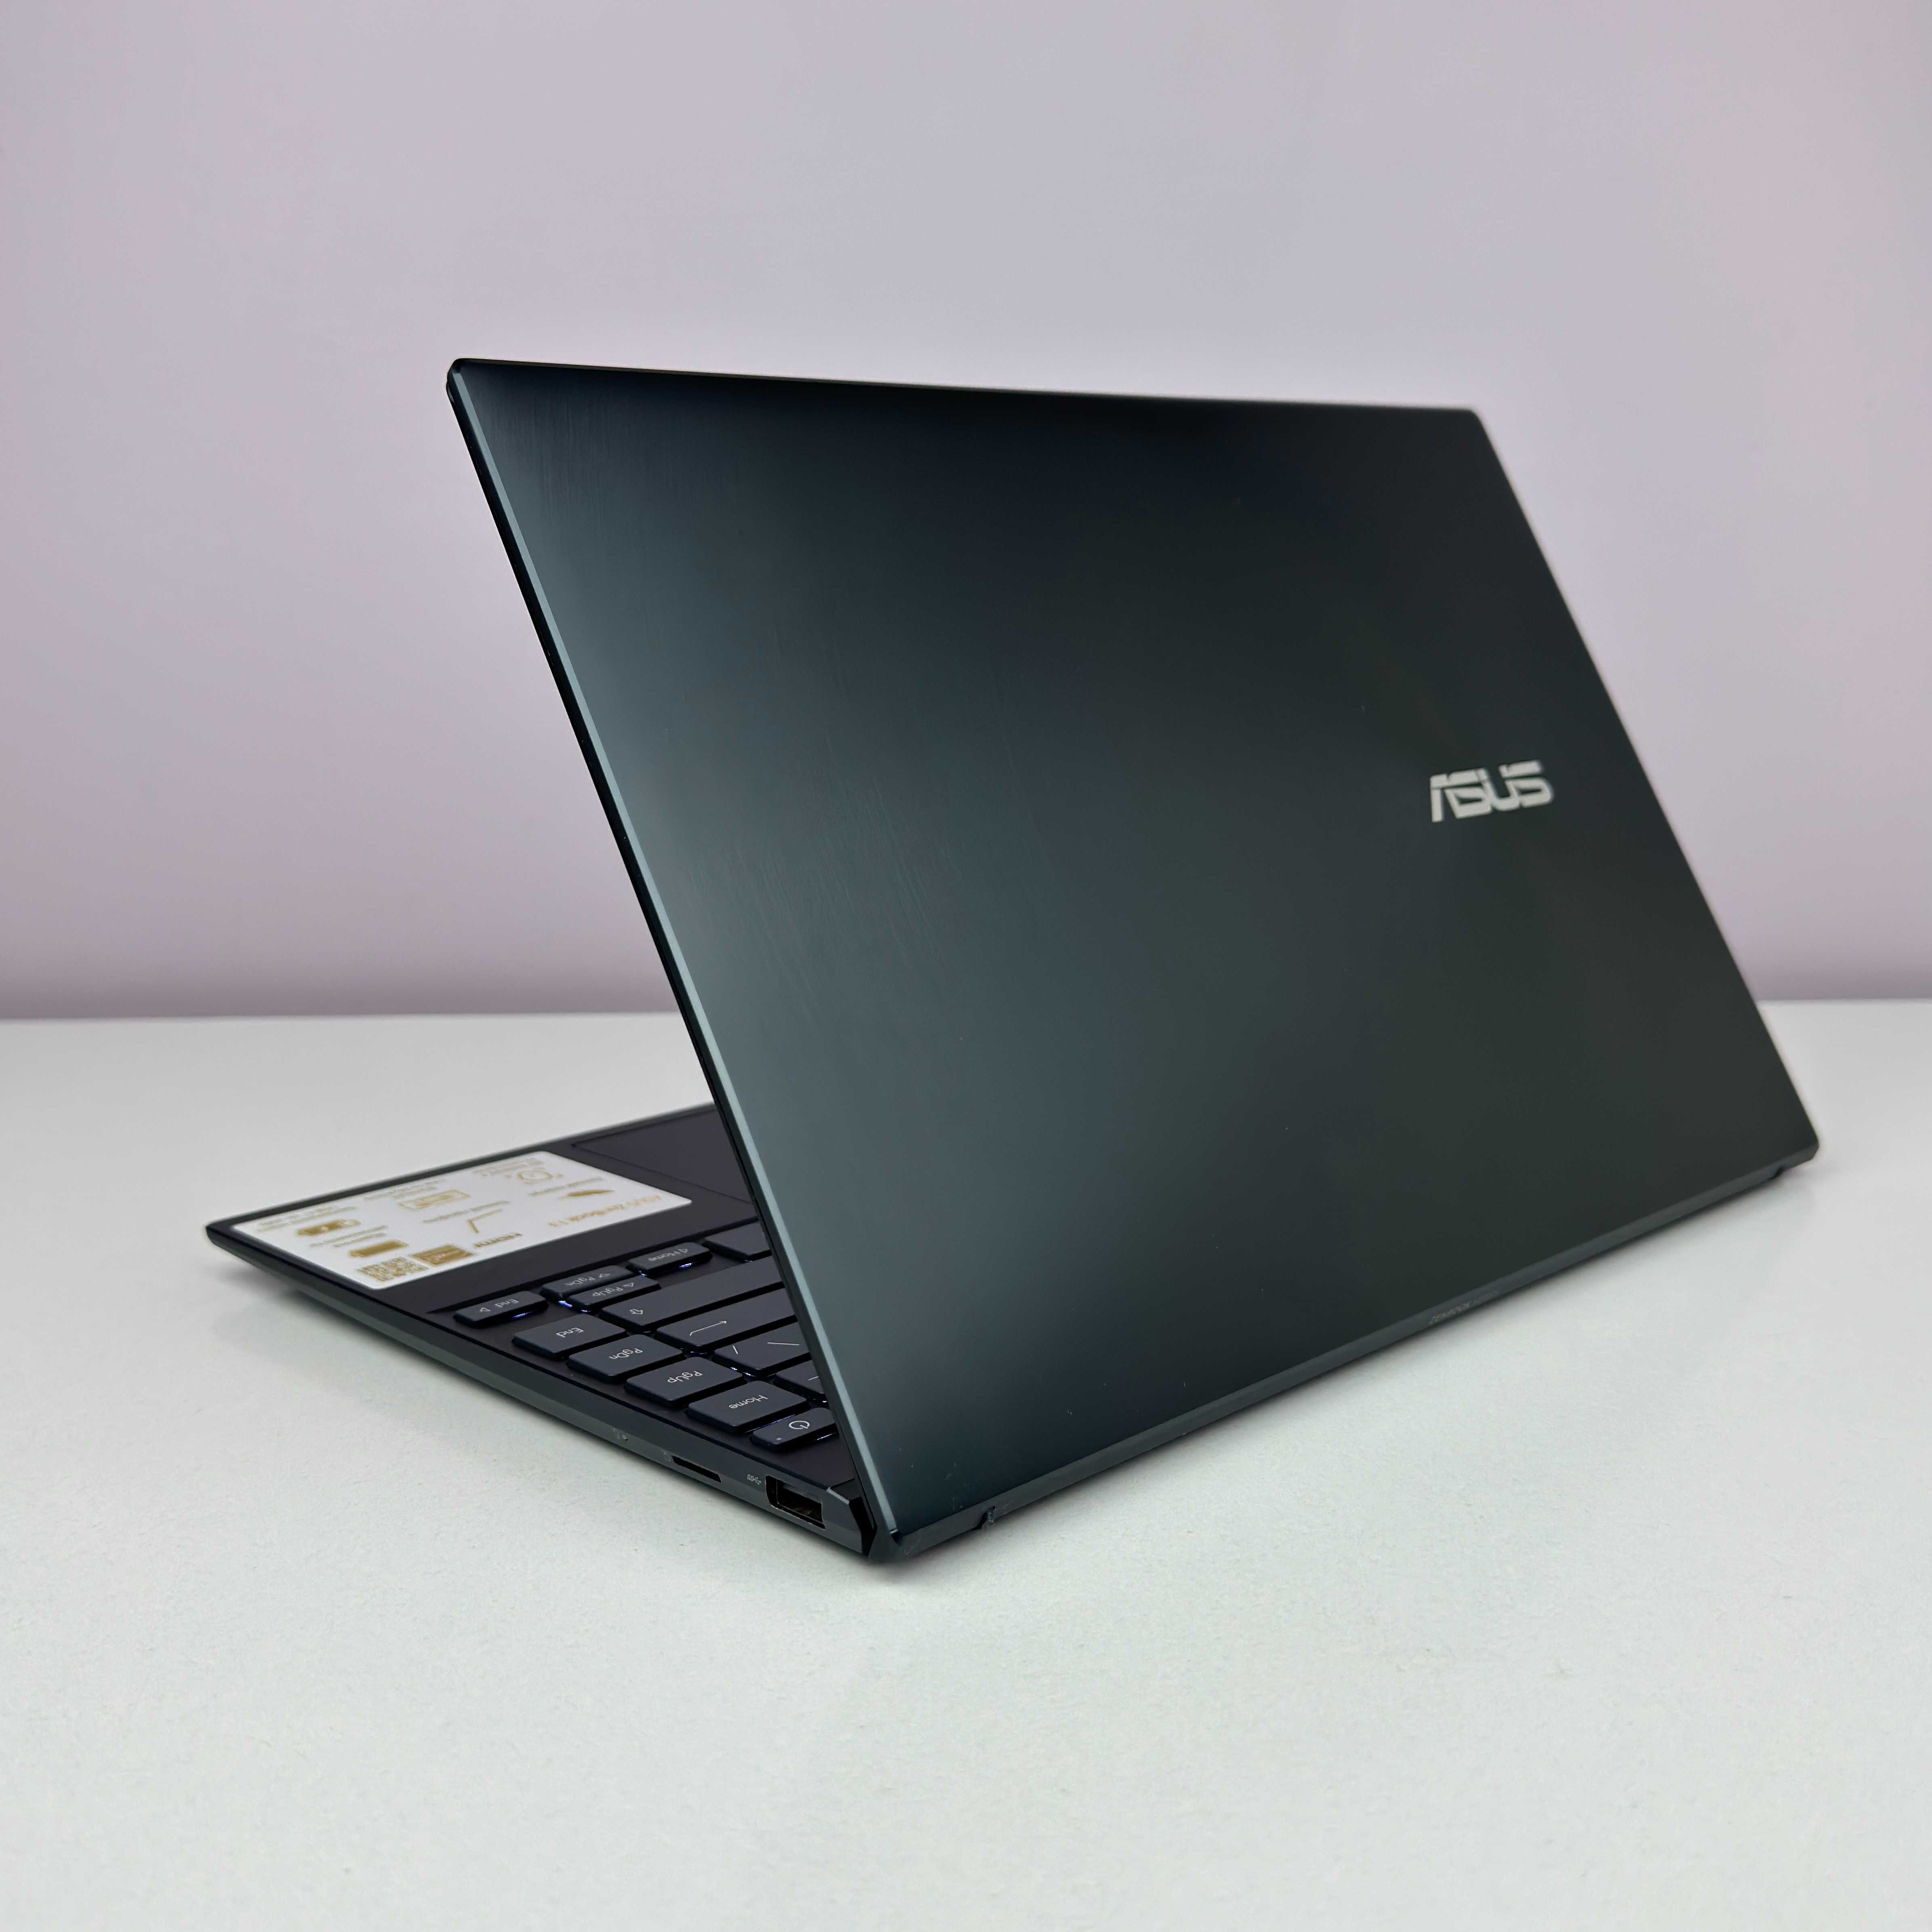 Asus Zenbook OLED Iris Plus i5-1035G4 RAM 16 Gb SSD 512 Gb